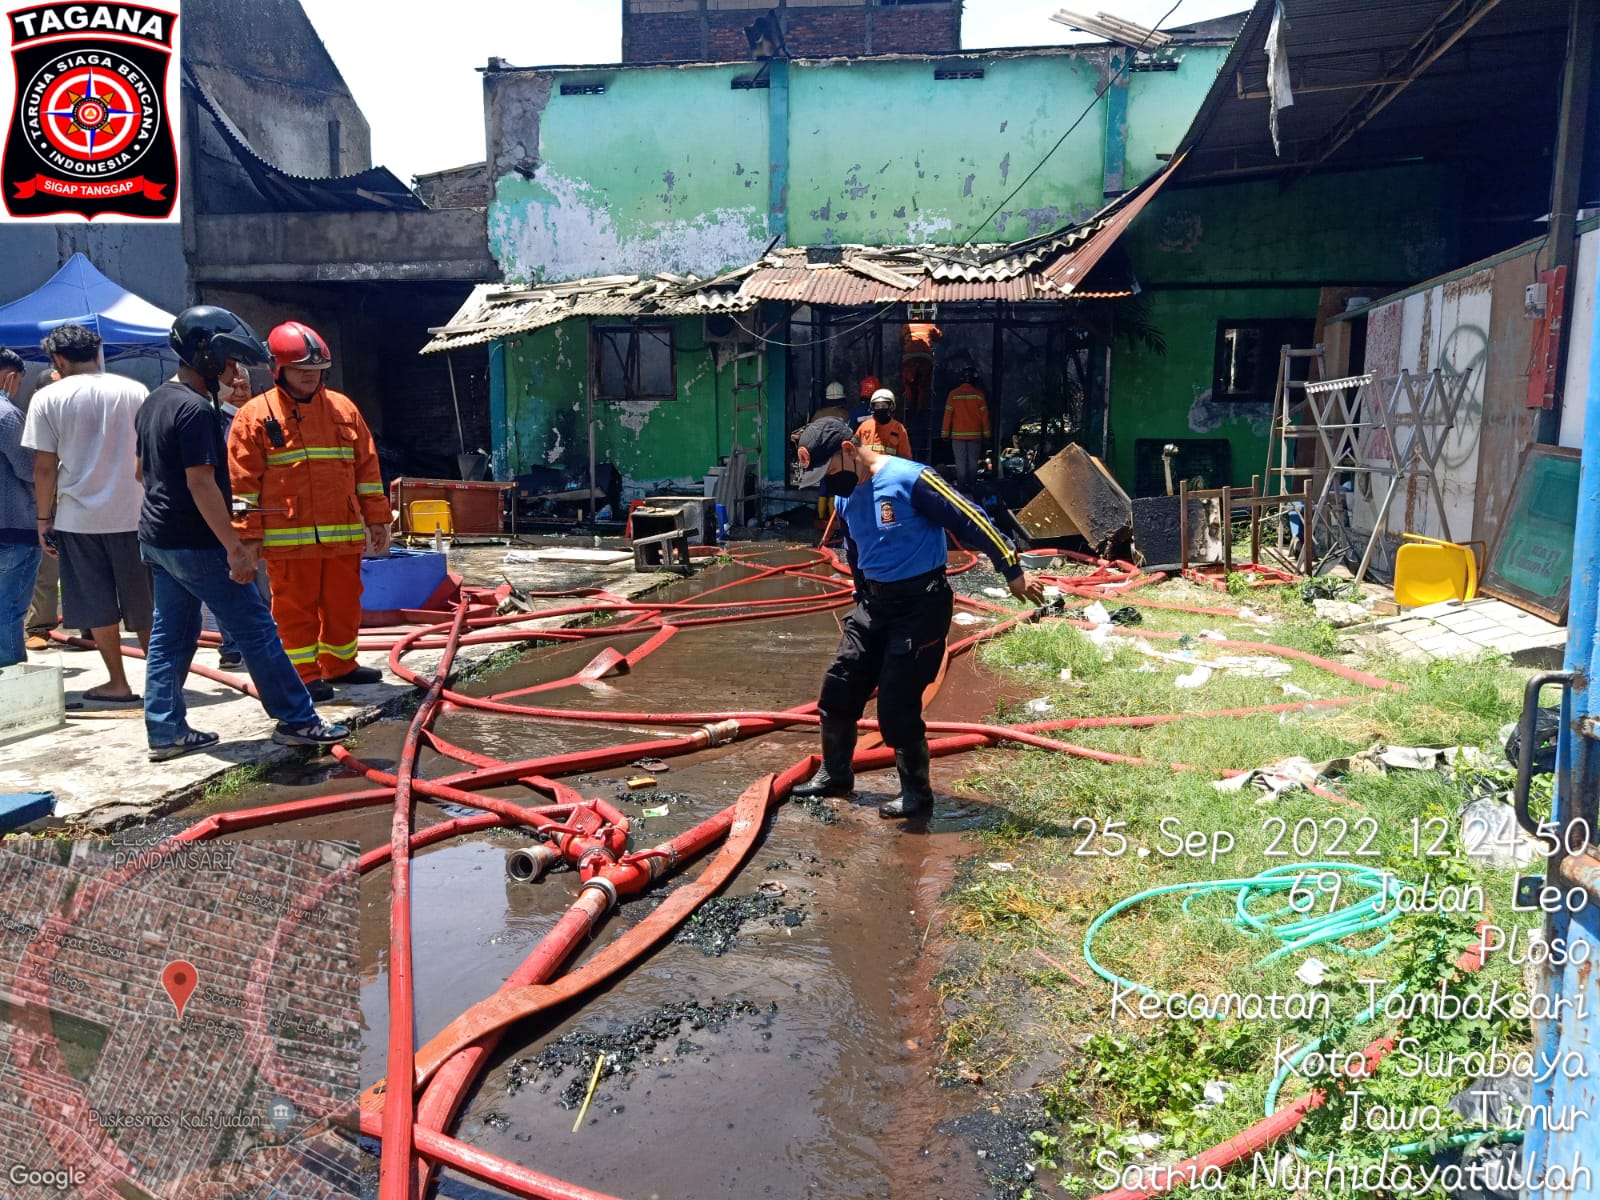 Tagana Kota Surabaya Bersinergi Tangani Kebakaran Gudang Event Organizer